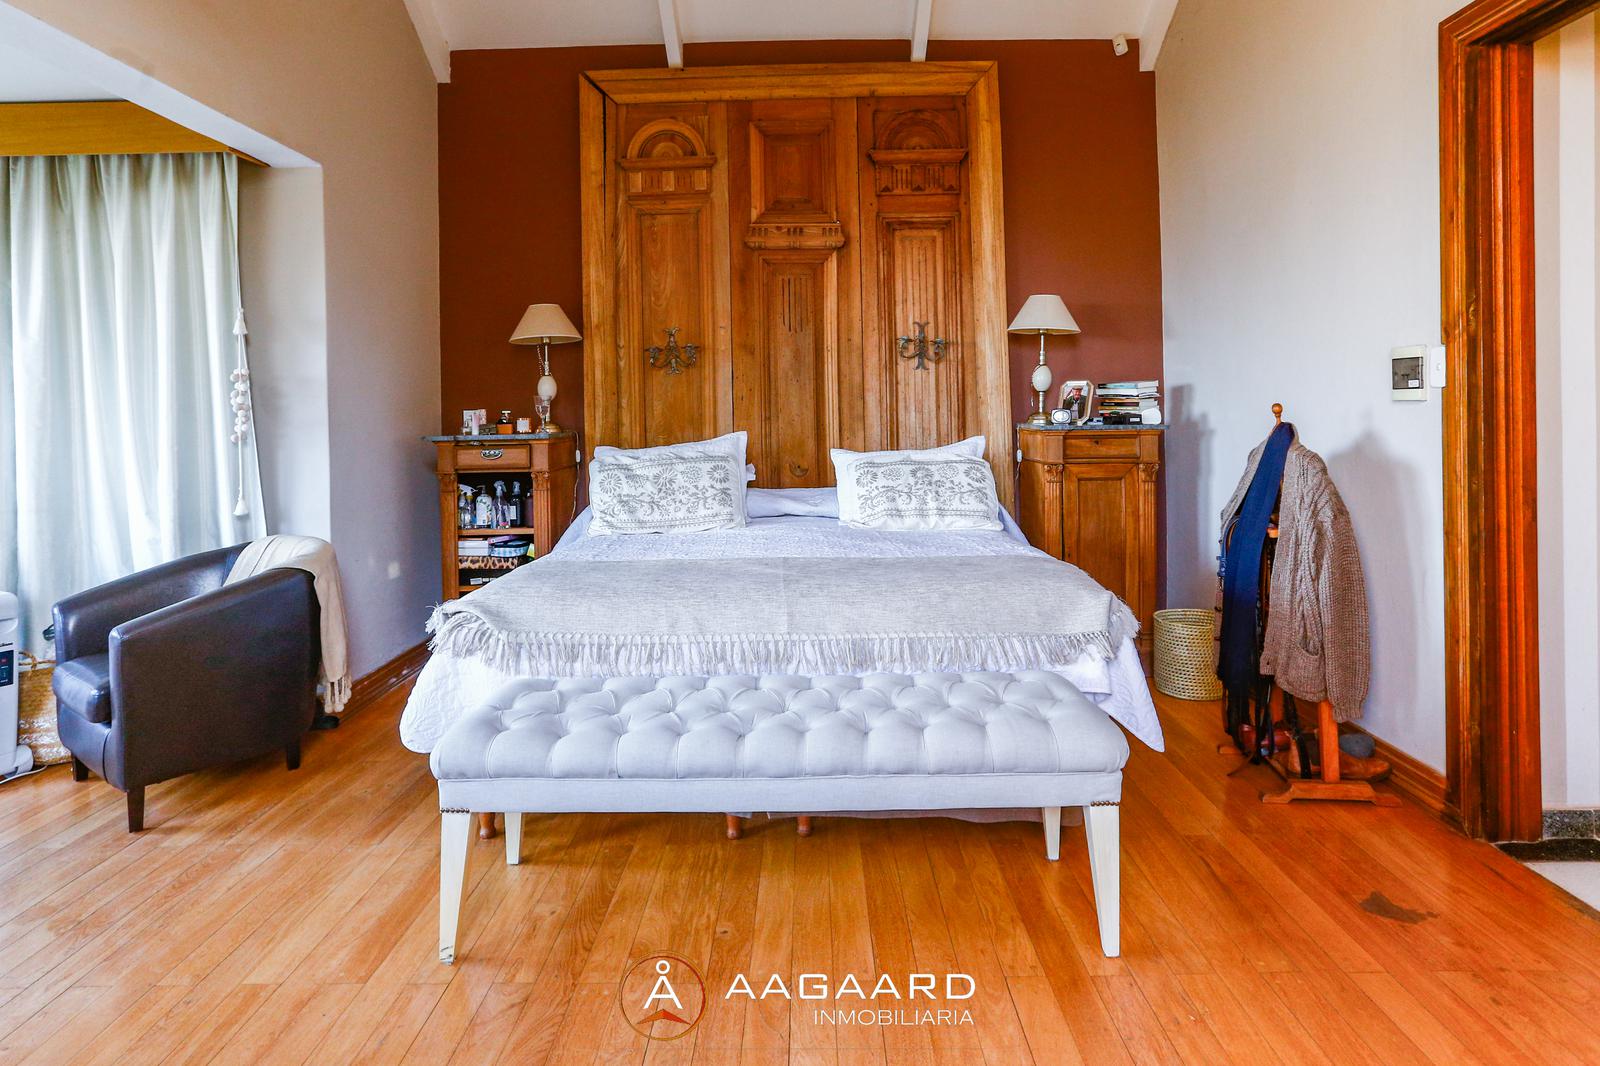 #4991141 | Sale | House | Malagueño (AAGAARD INMOBILIARIA)